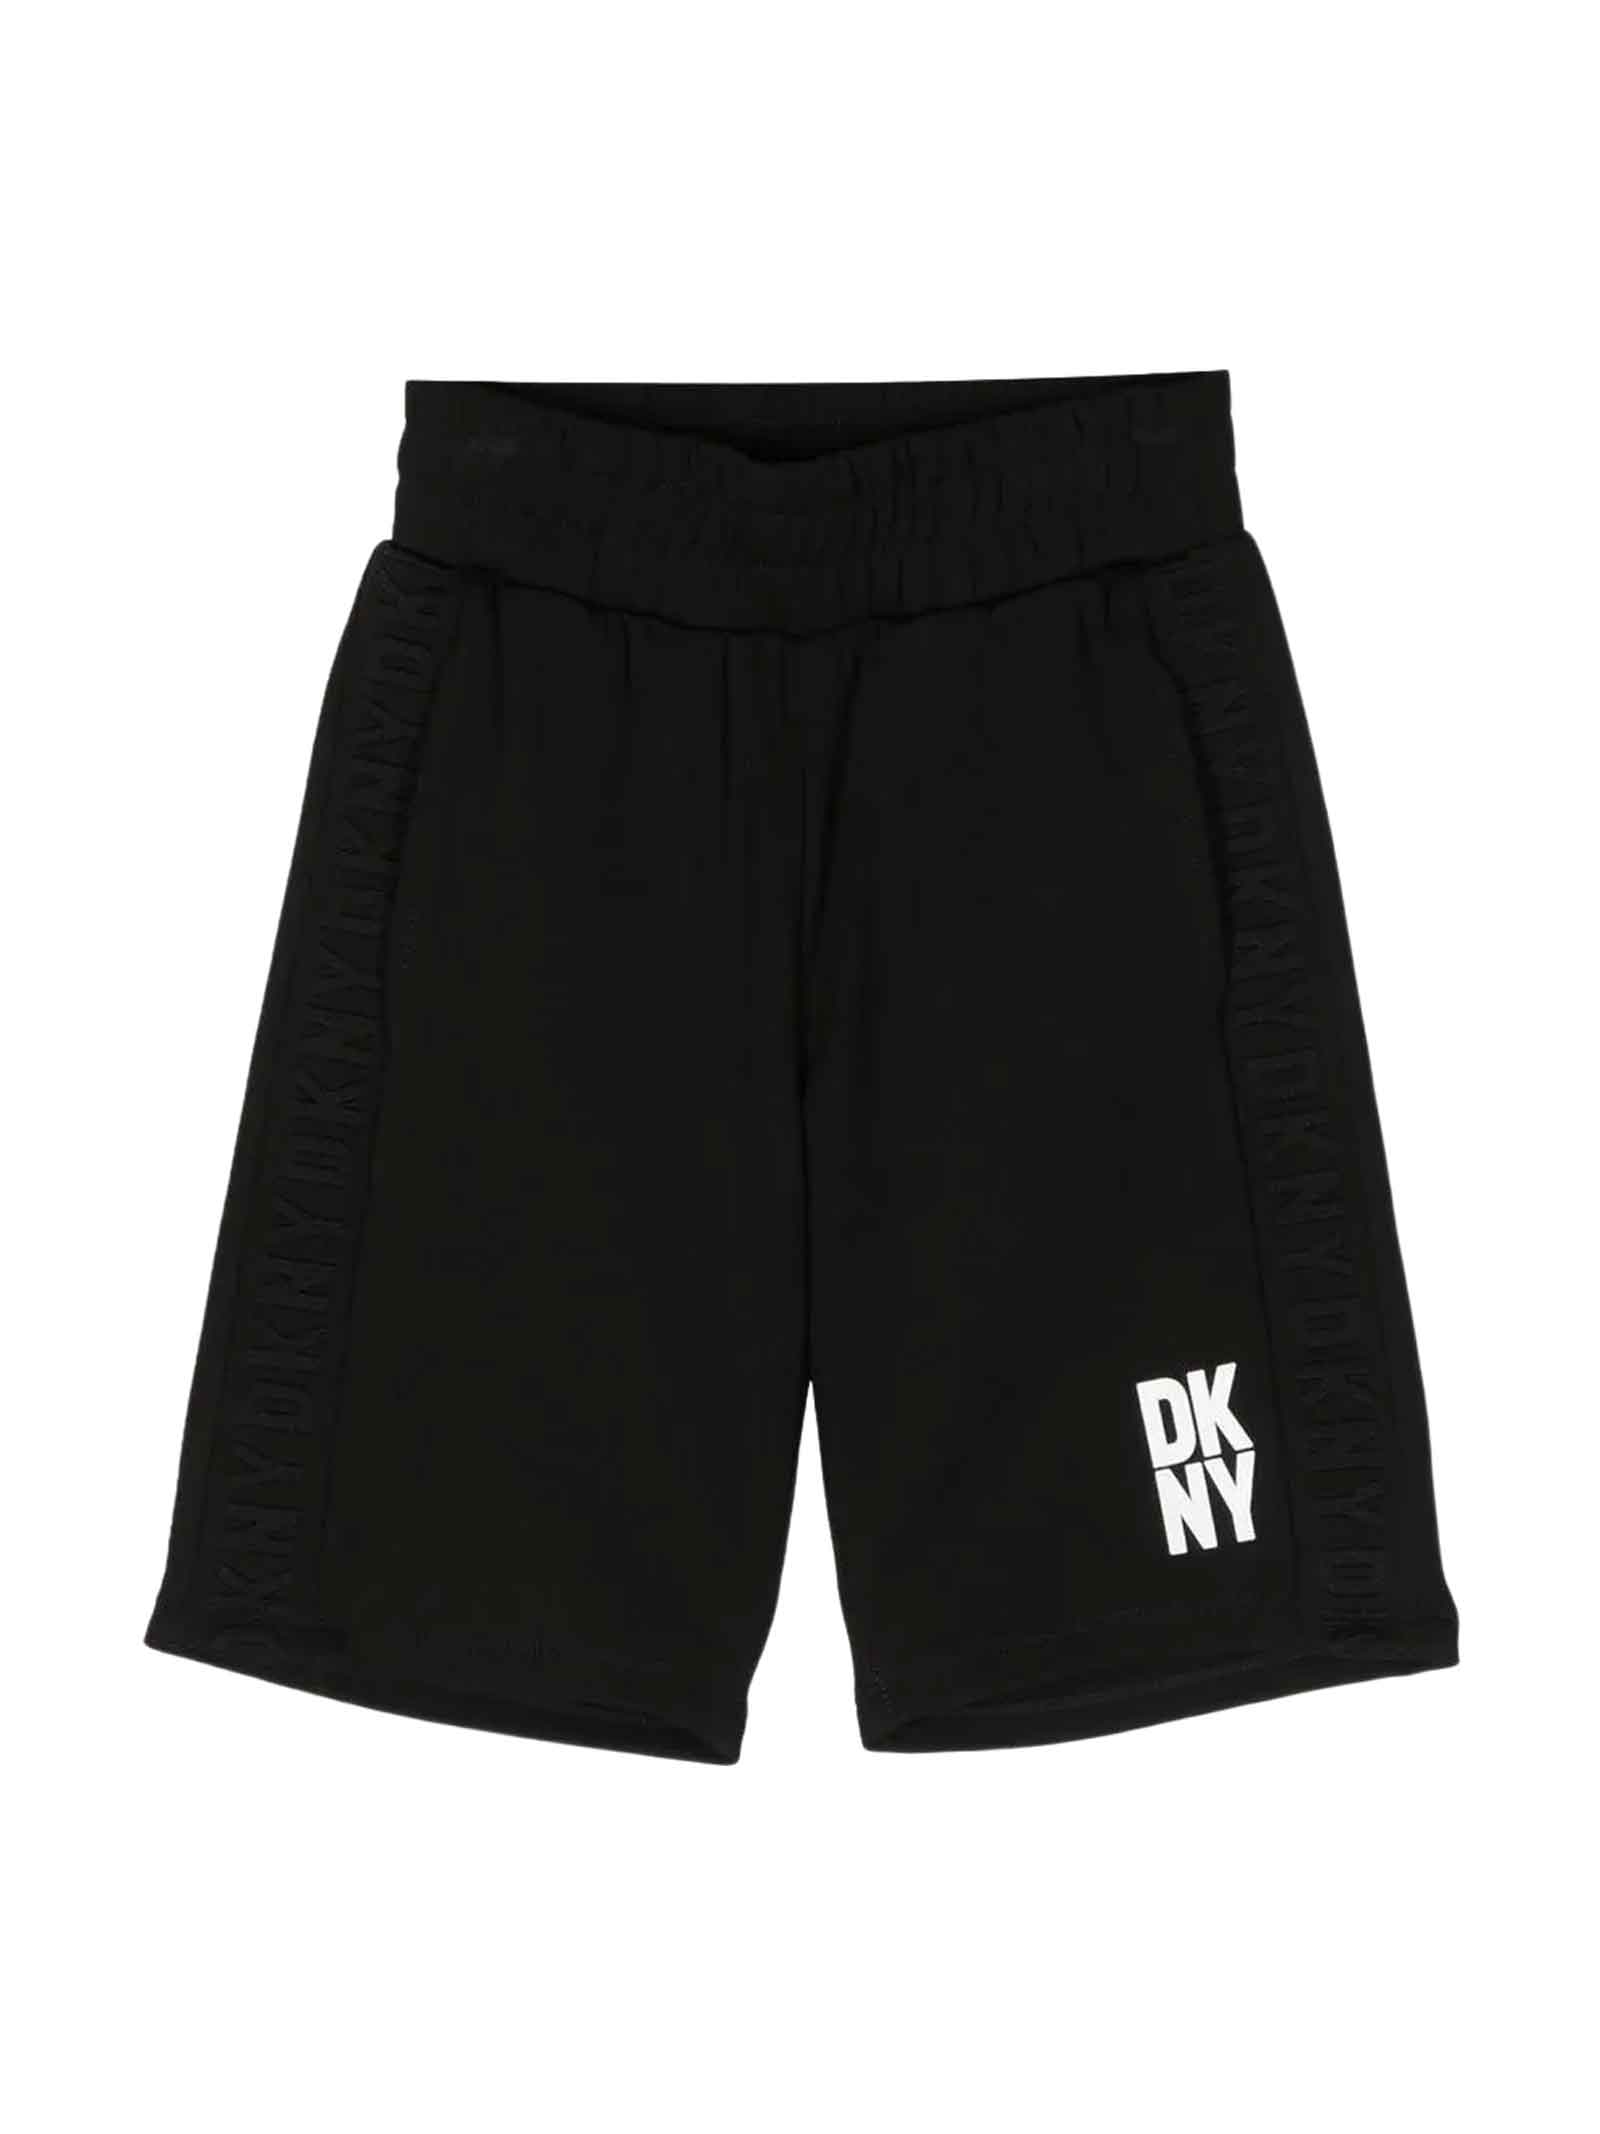 DKNY Black Shorts Boy